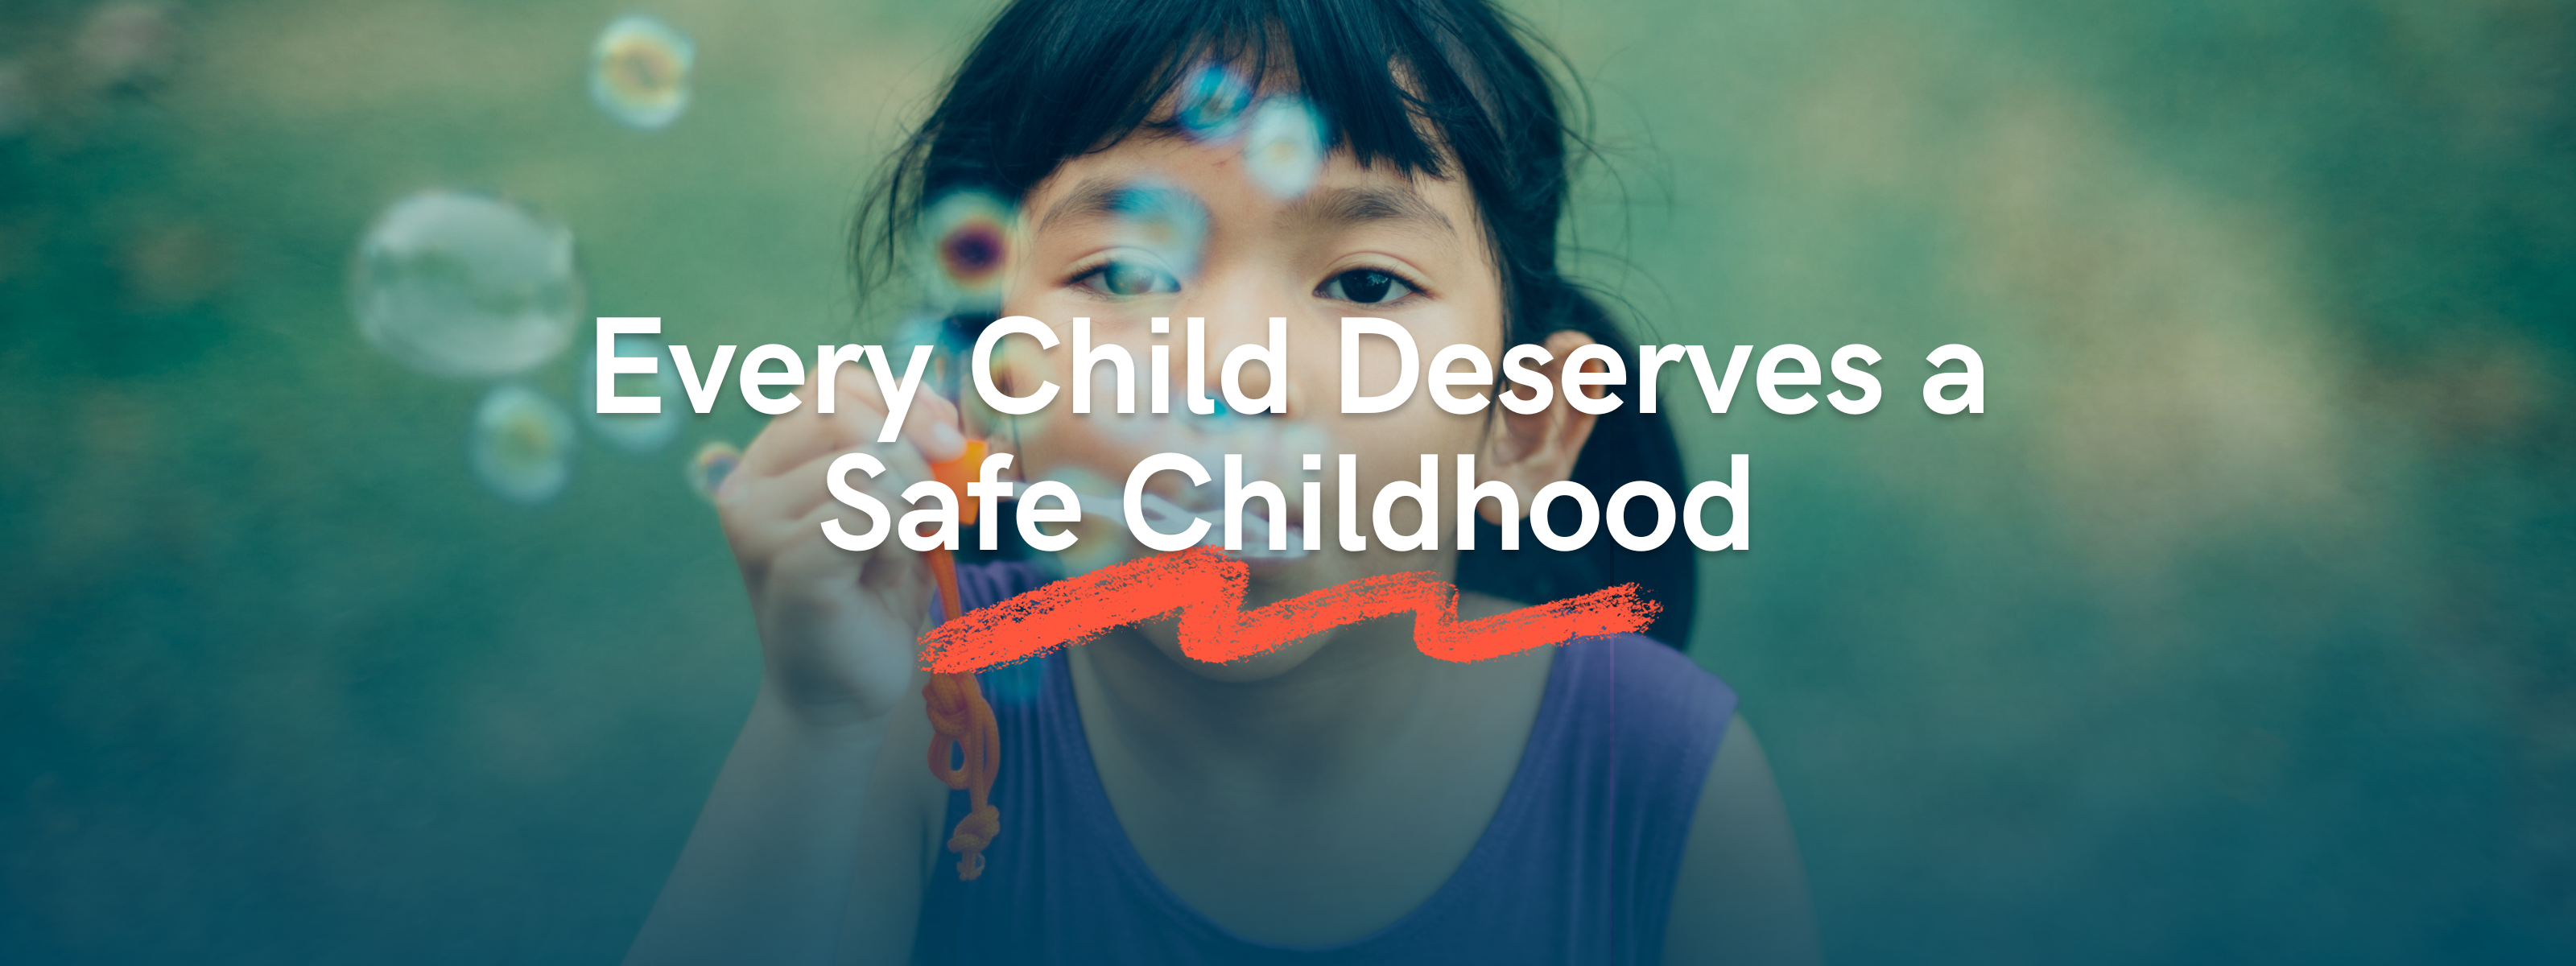 Every Child Deserves a Safe Childhood Image